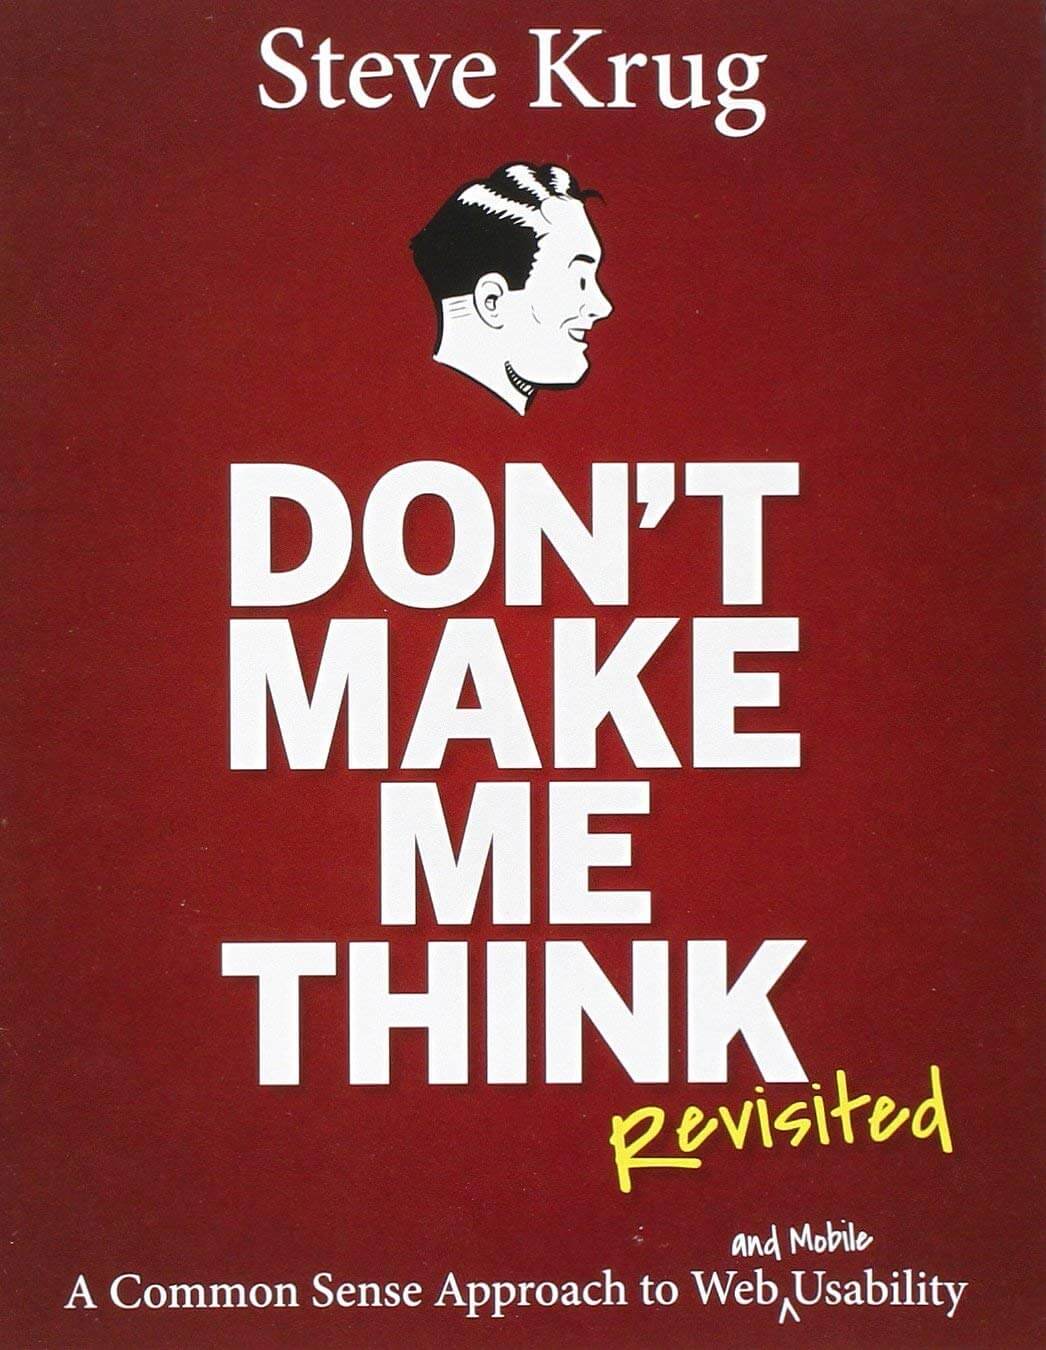 Book cover for Steve Krug's "Don't Make Me Think"